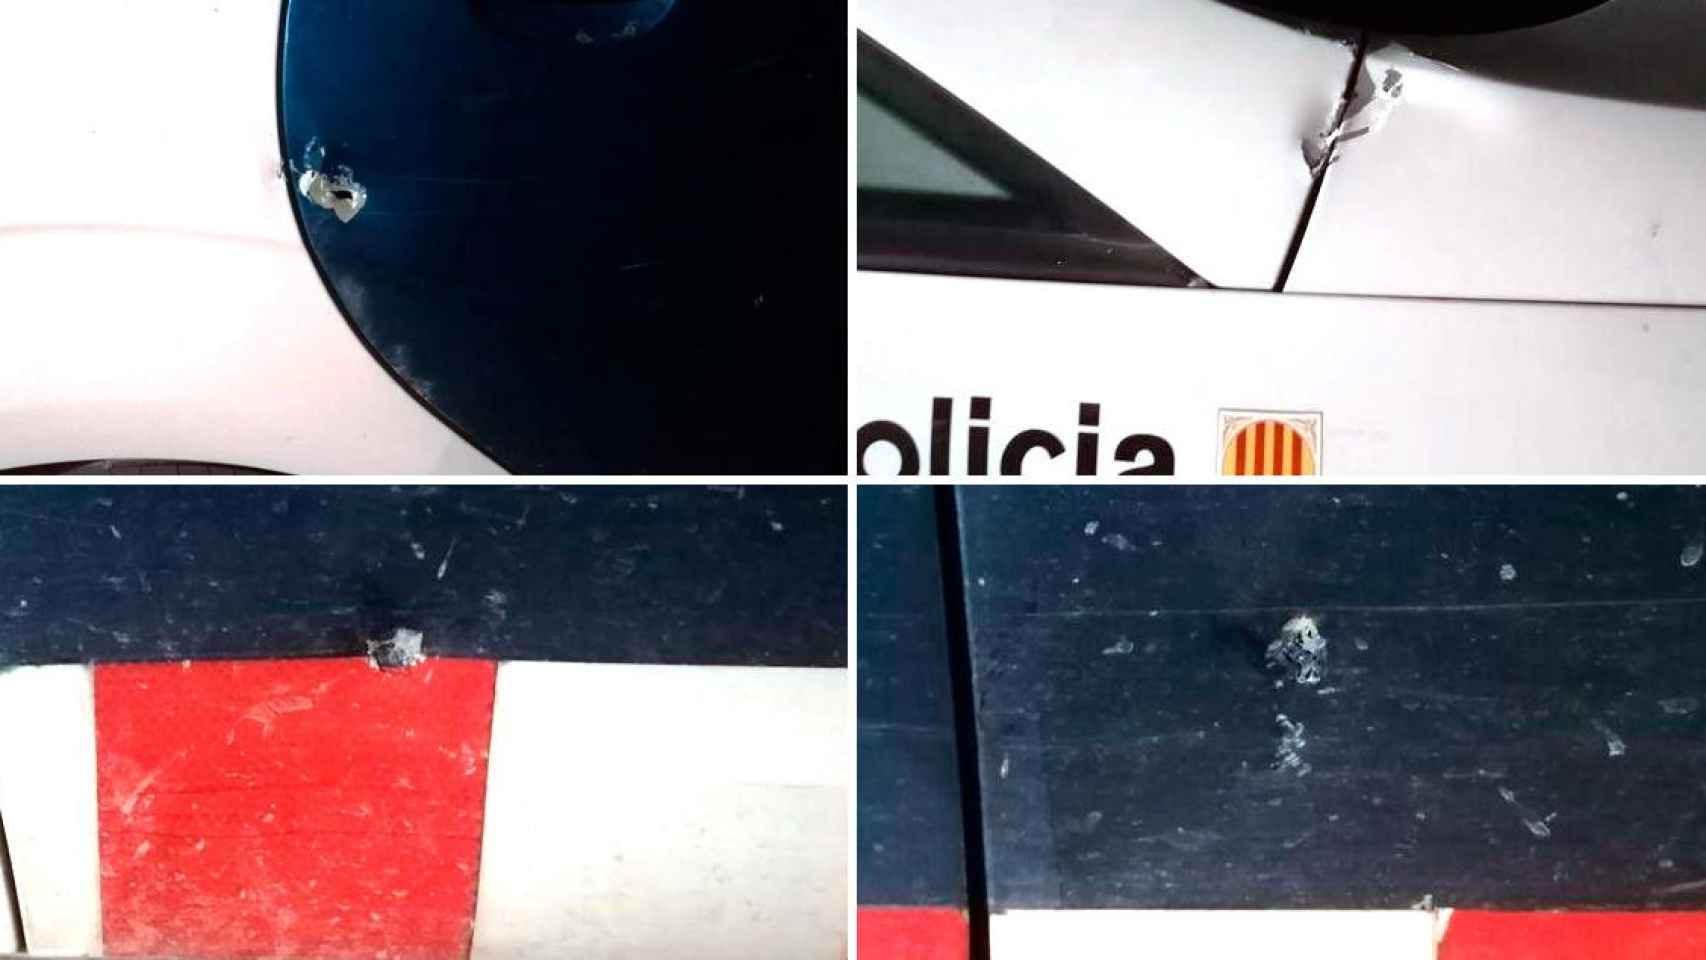 Impactos de proyectil en un coche de los Mossos d'Esquadra en Figueres / CG